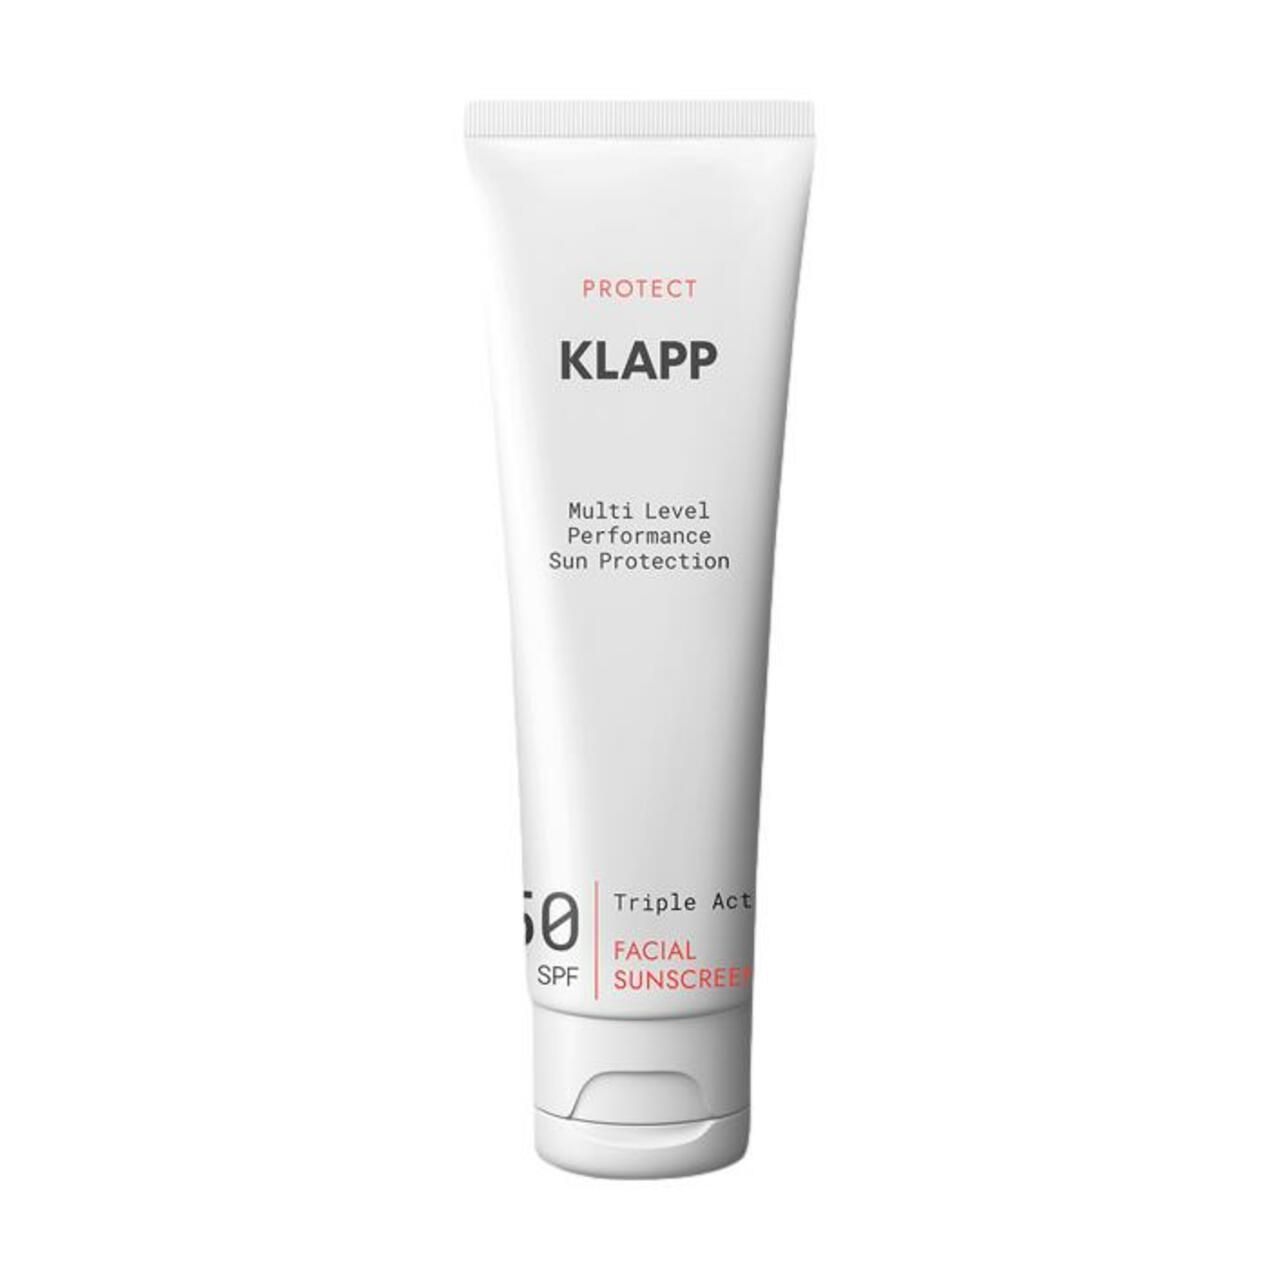 Klapp, Multi Level Performance Sun Protection Triple Action Facial Sunscreen 50 SPF